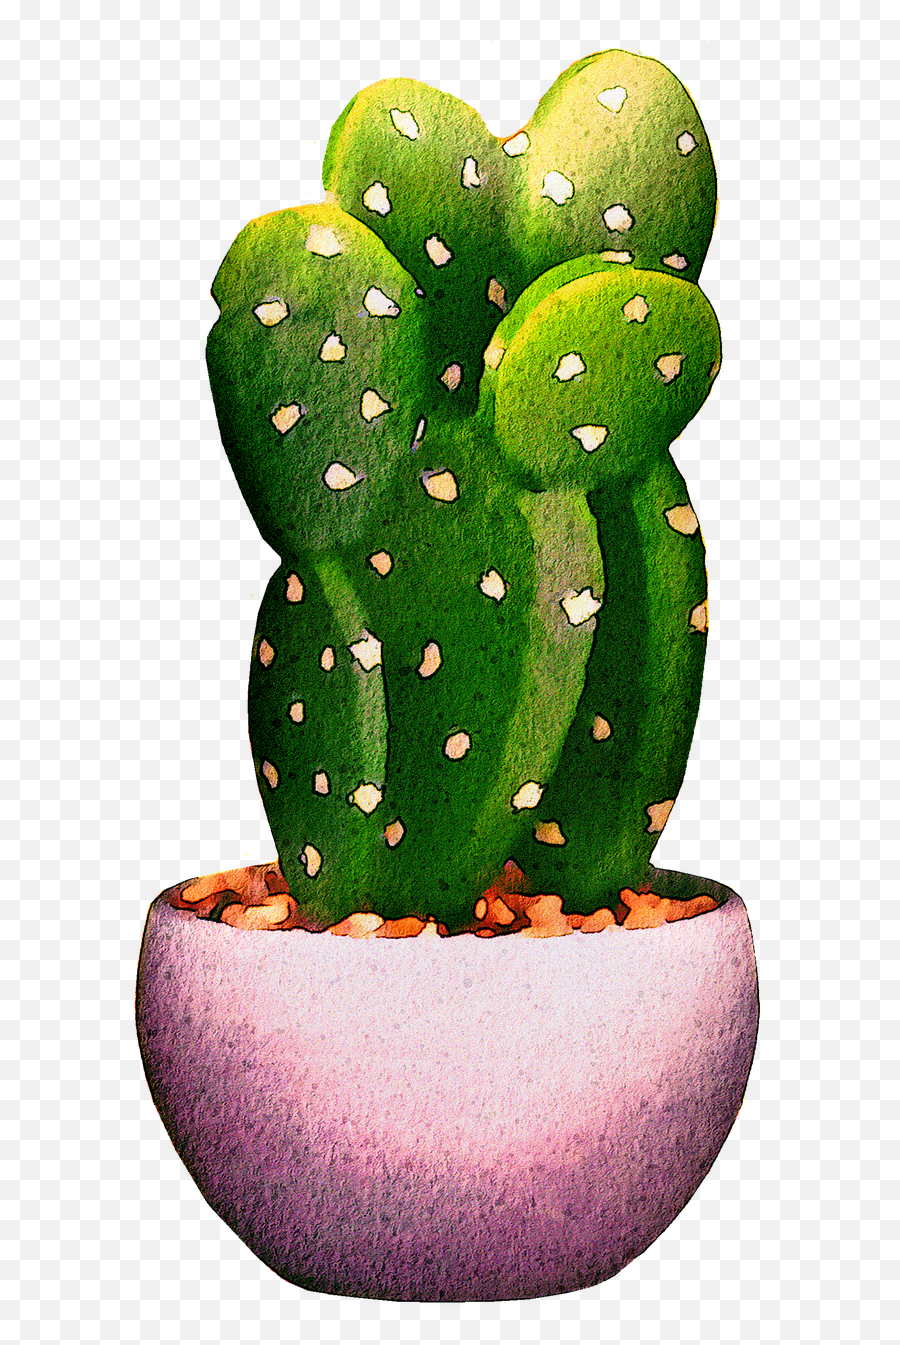 Watercolor Cactus Succulents Cacti - Free Image On Pixabay Cactos E Suculentas Png,Cactus Transparent Background